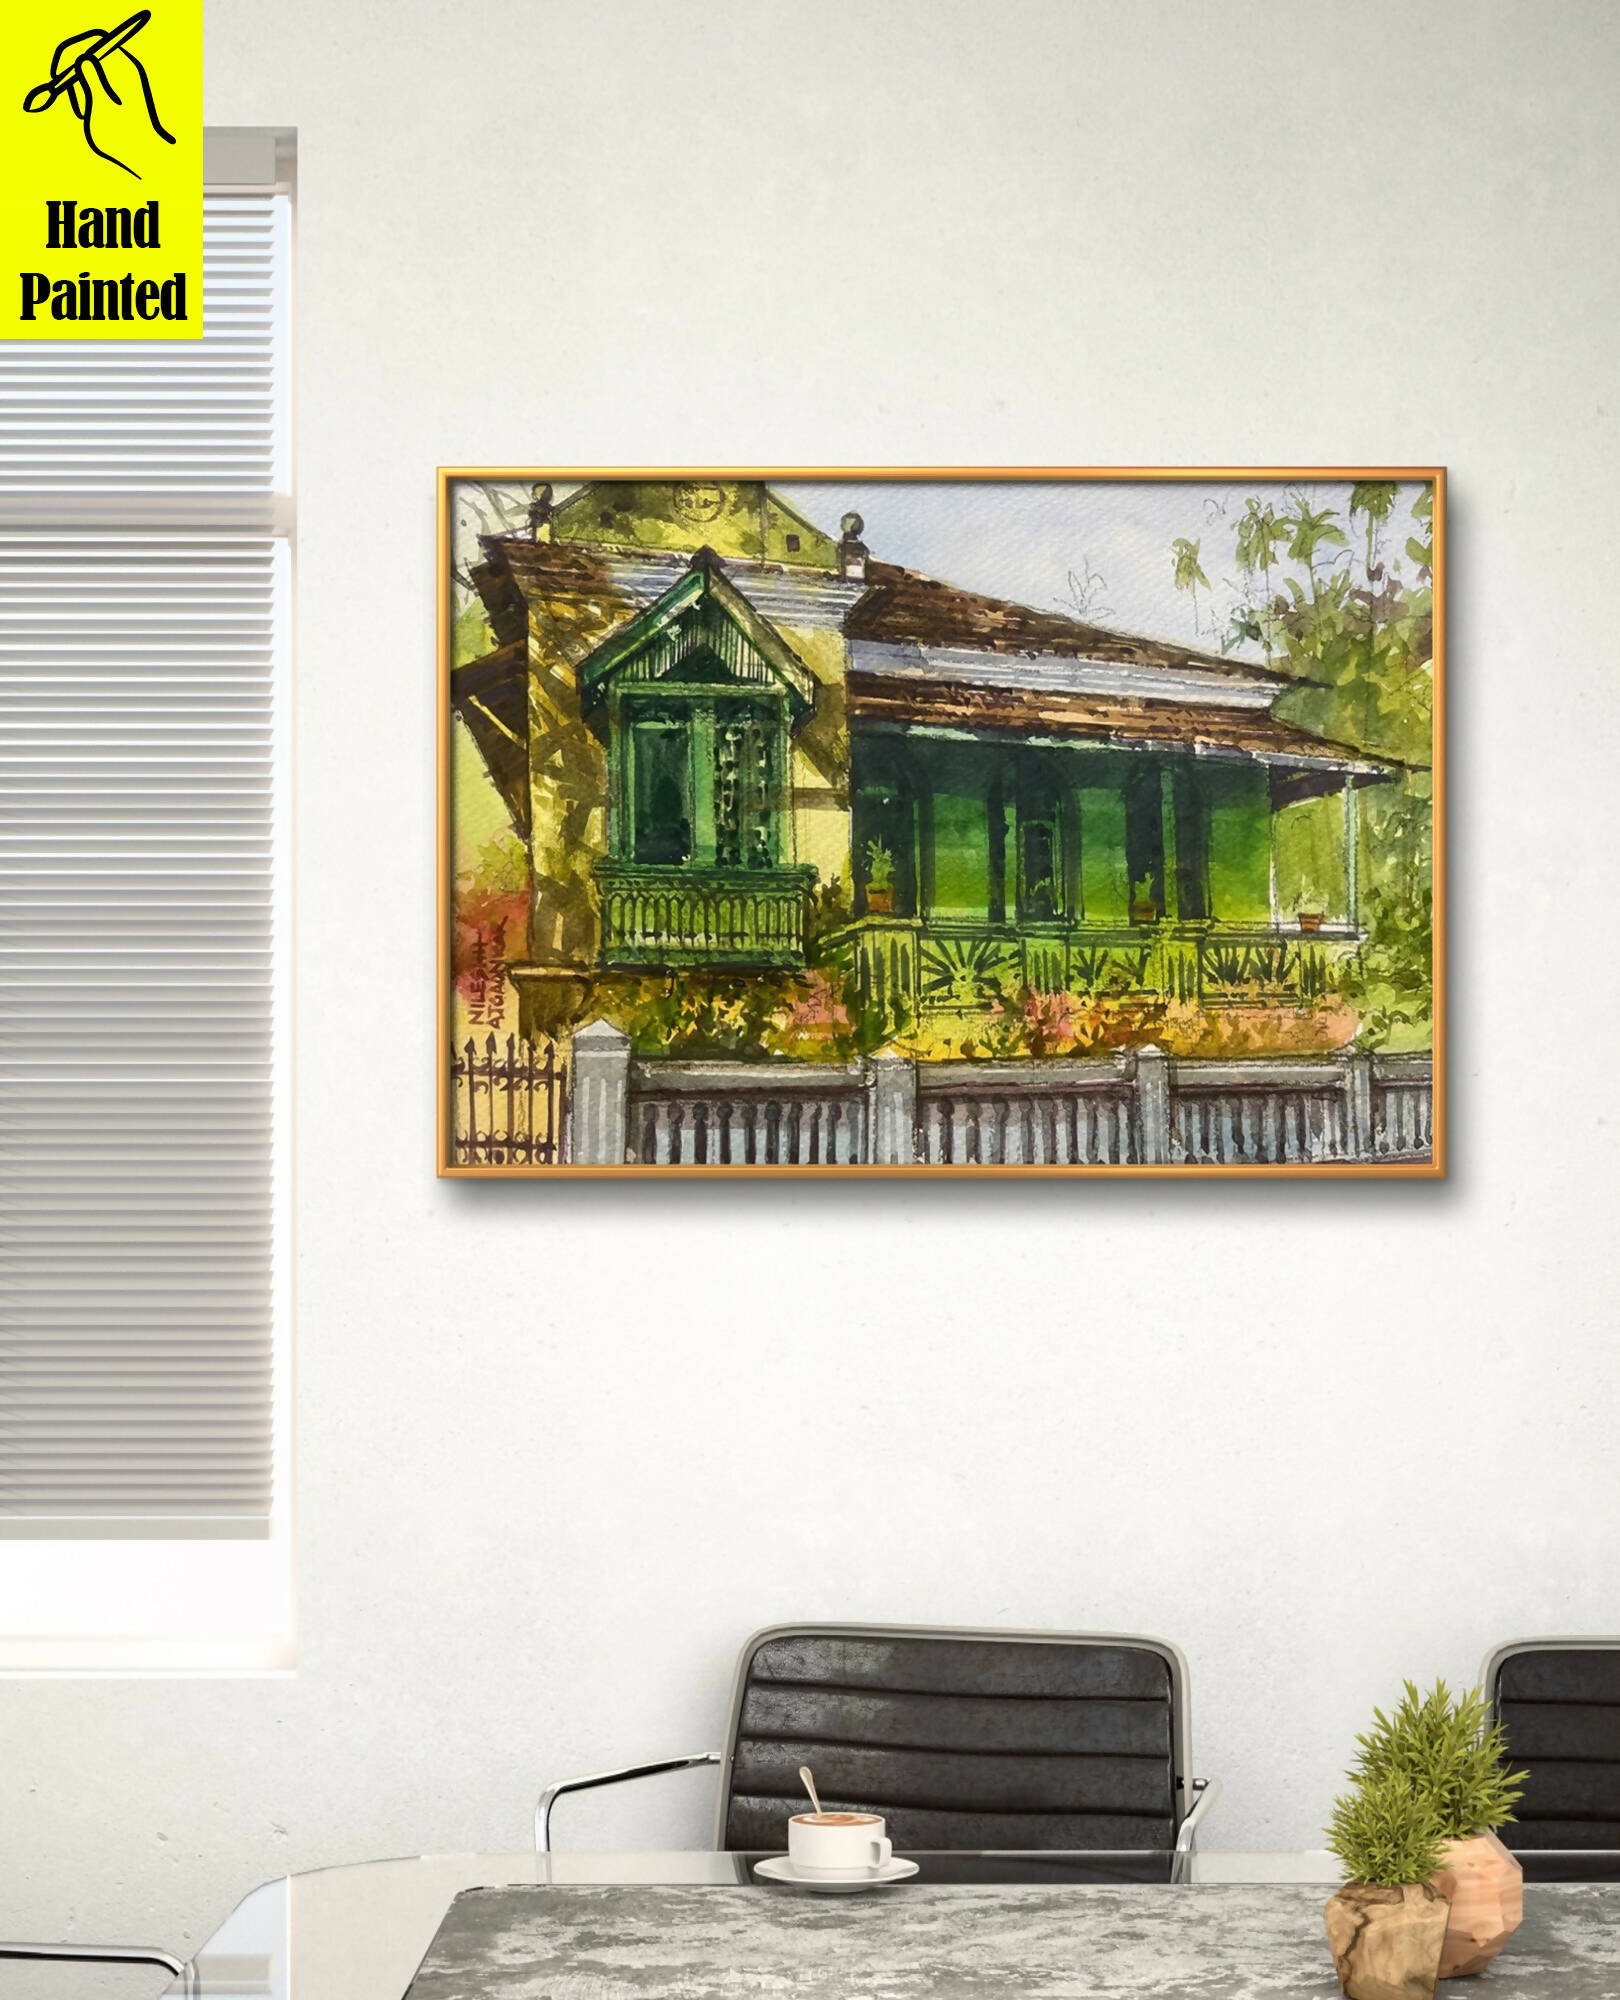 Title: Goan house, Decorative wall